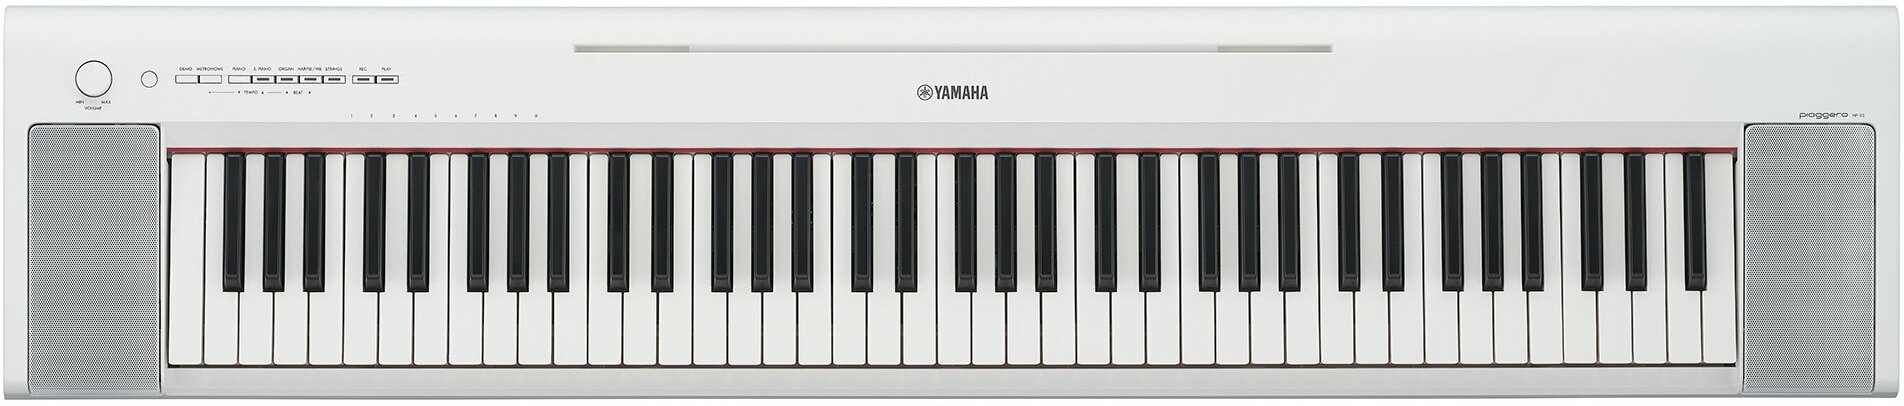 Yamaha Np-35 Wh - Portable digital piano - Main picture